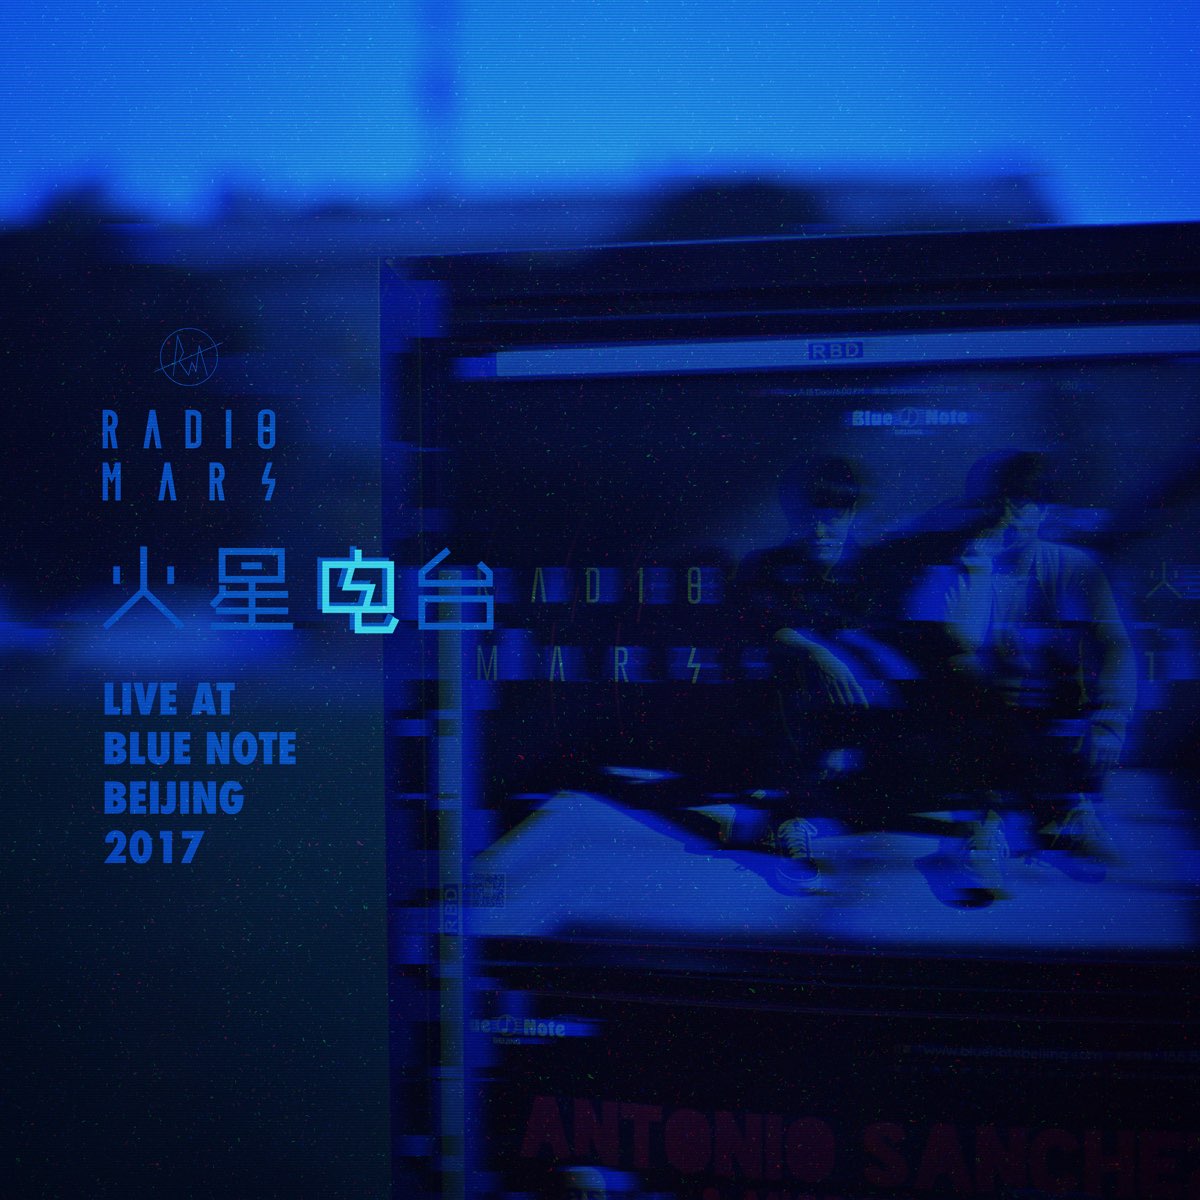 Radio Mars Live at Blue Note Beijing (Live) by Radio Mars on Apple Music